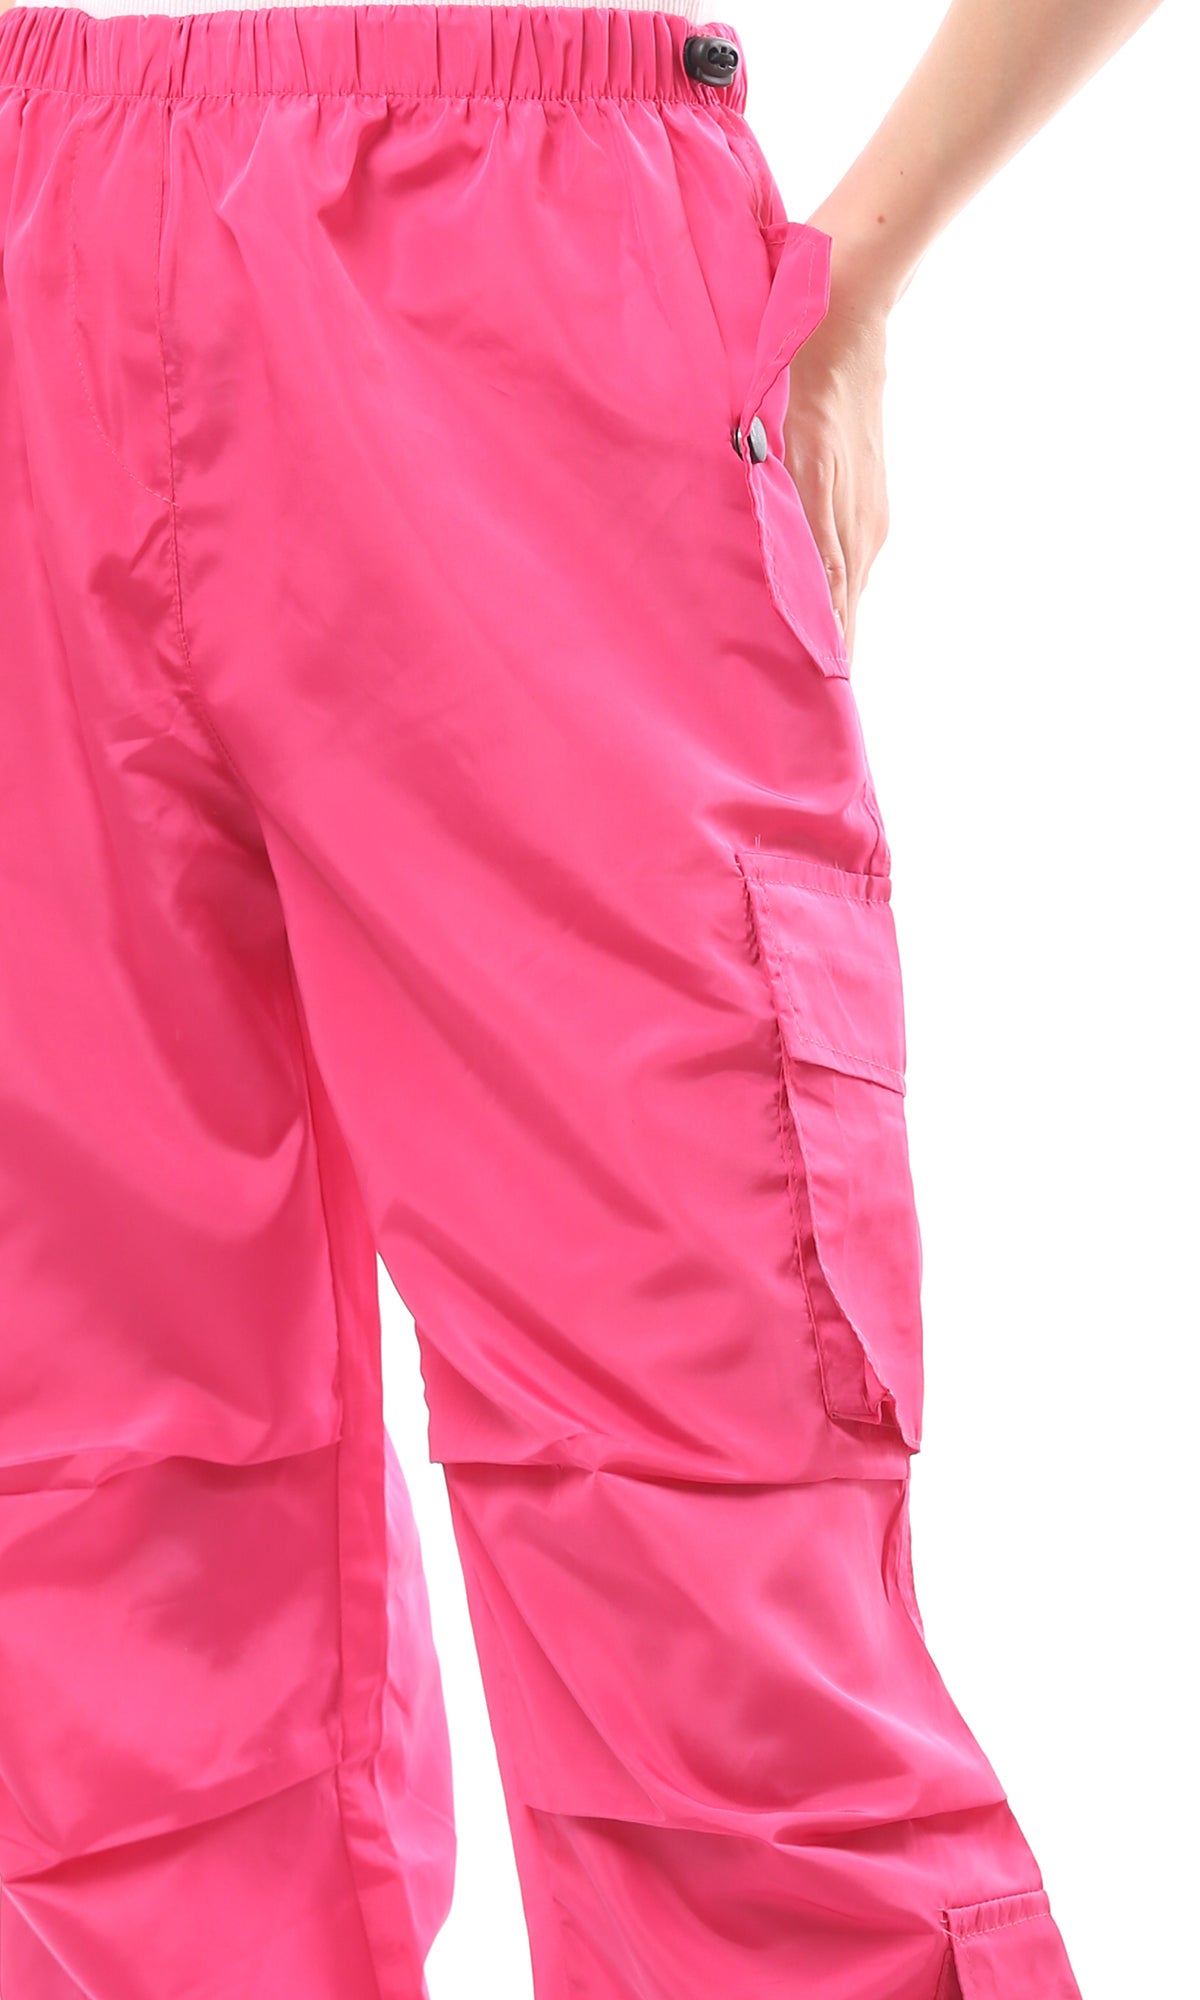 O170604 Fuchsia Waterproof Pants With Side Pockets